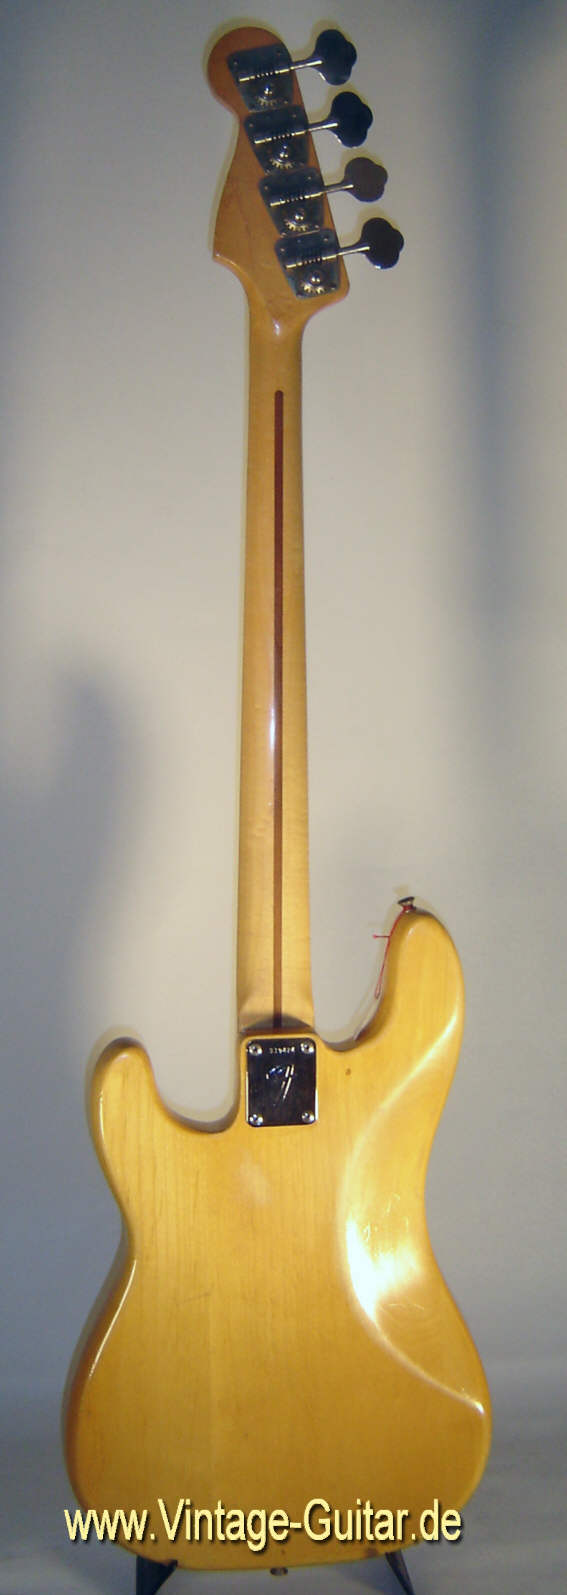 Fender Precision Bass 1972 natural back.jpg